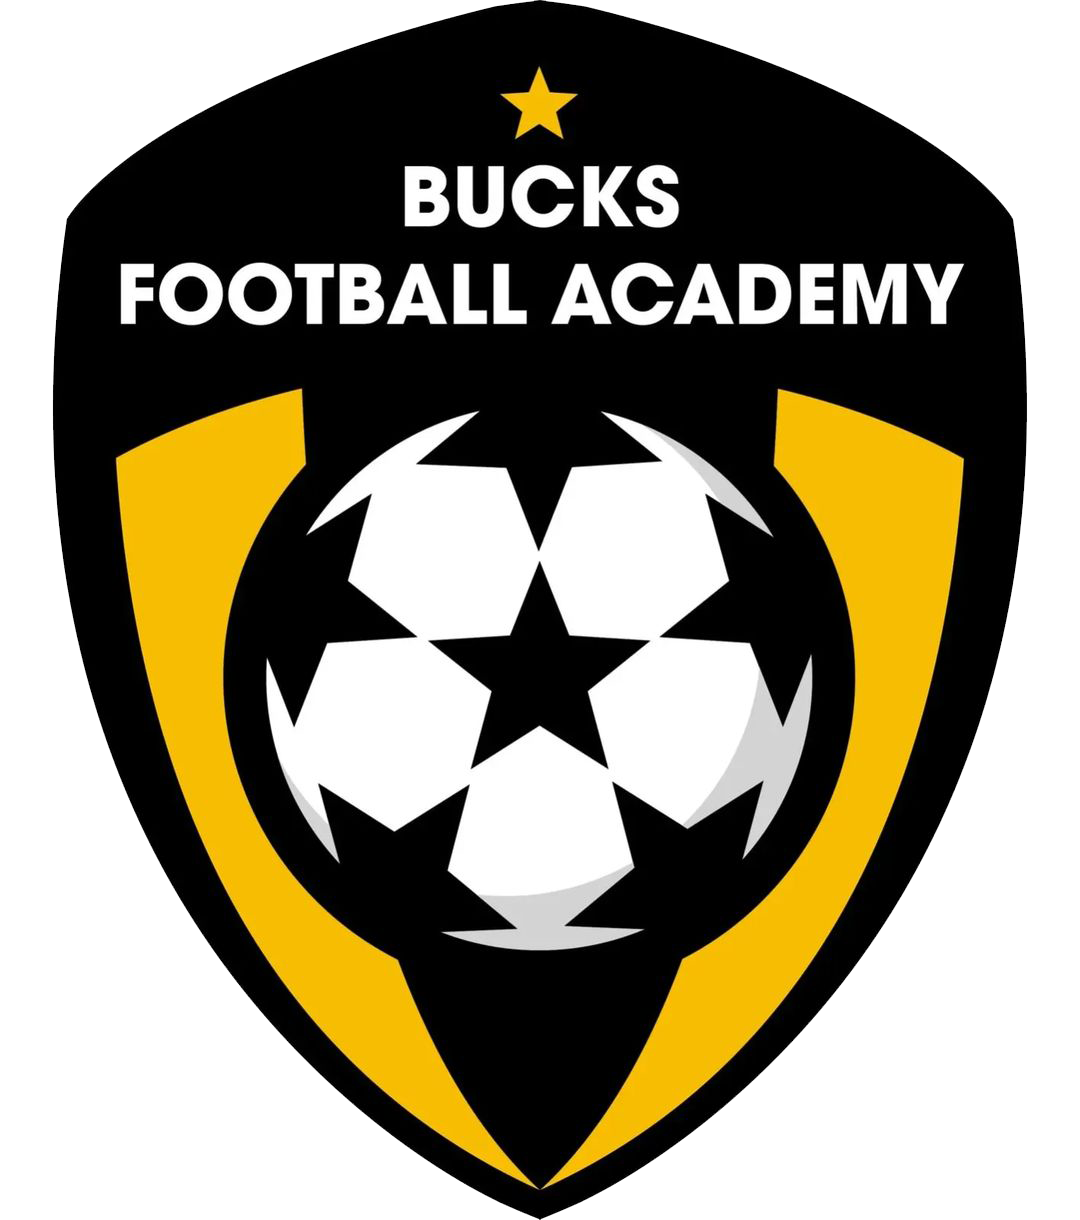 JPL - Junior Premier League - Bucks Football Academy